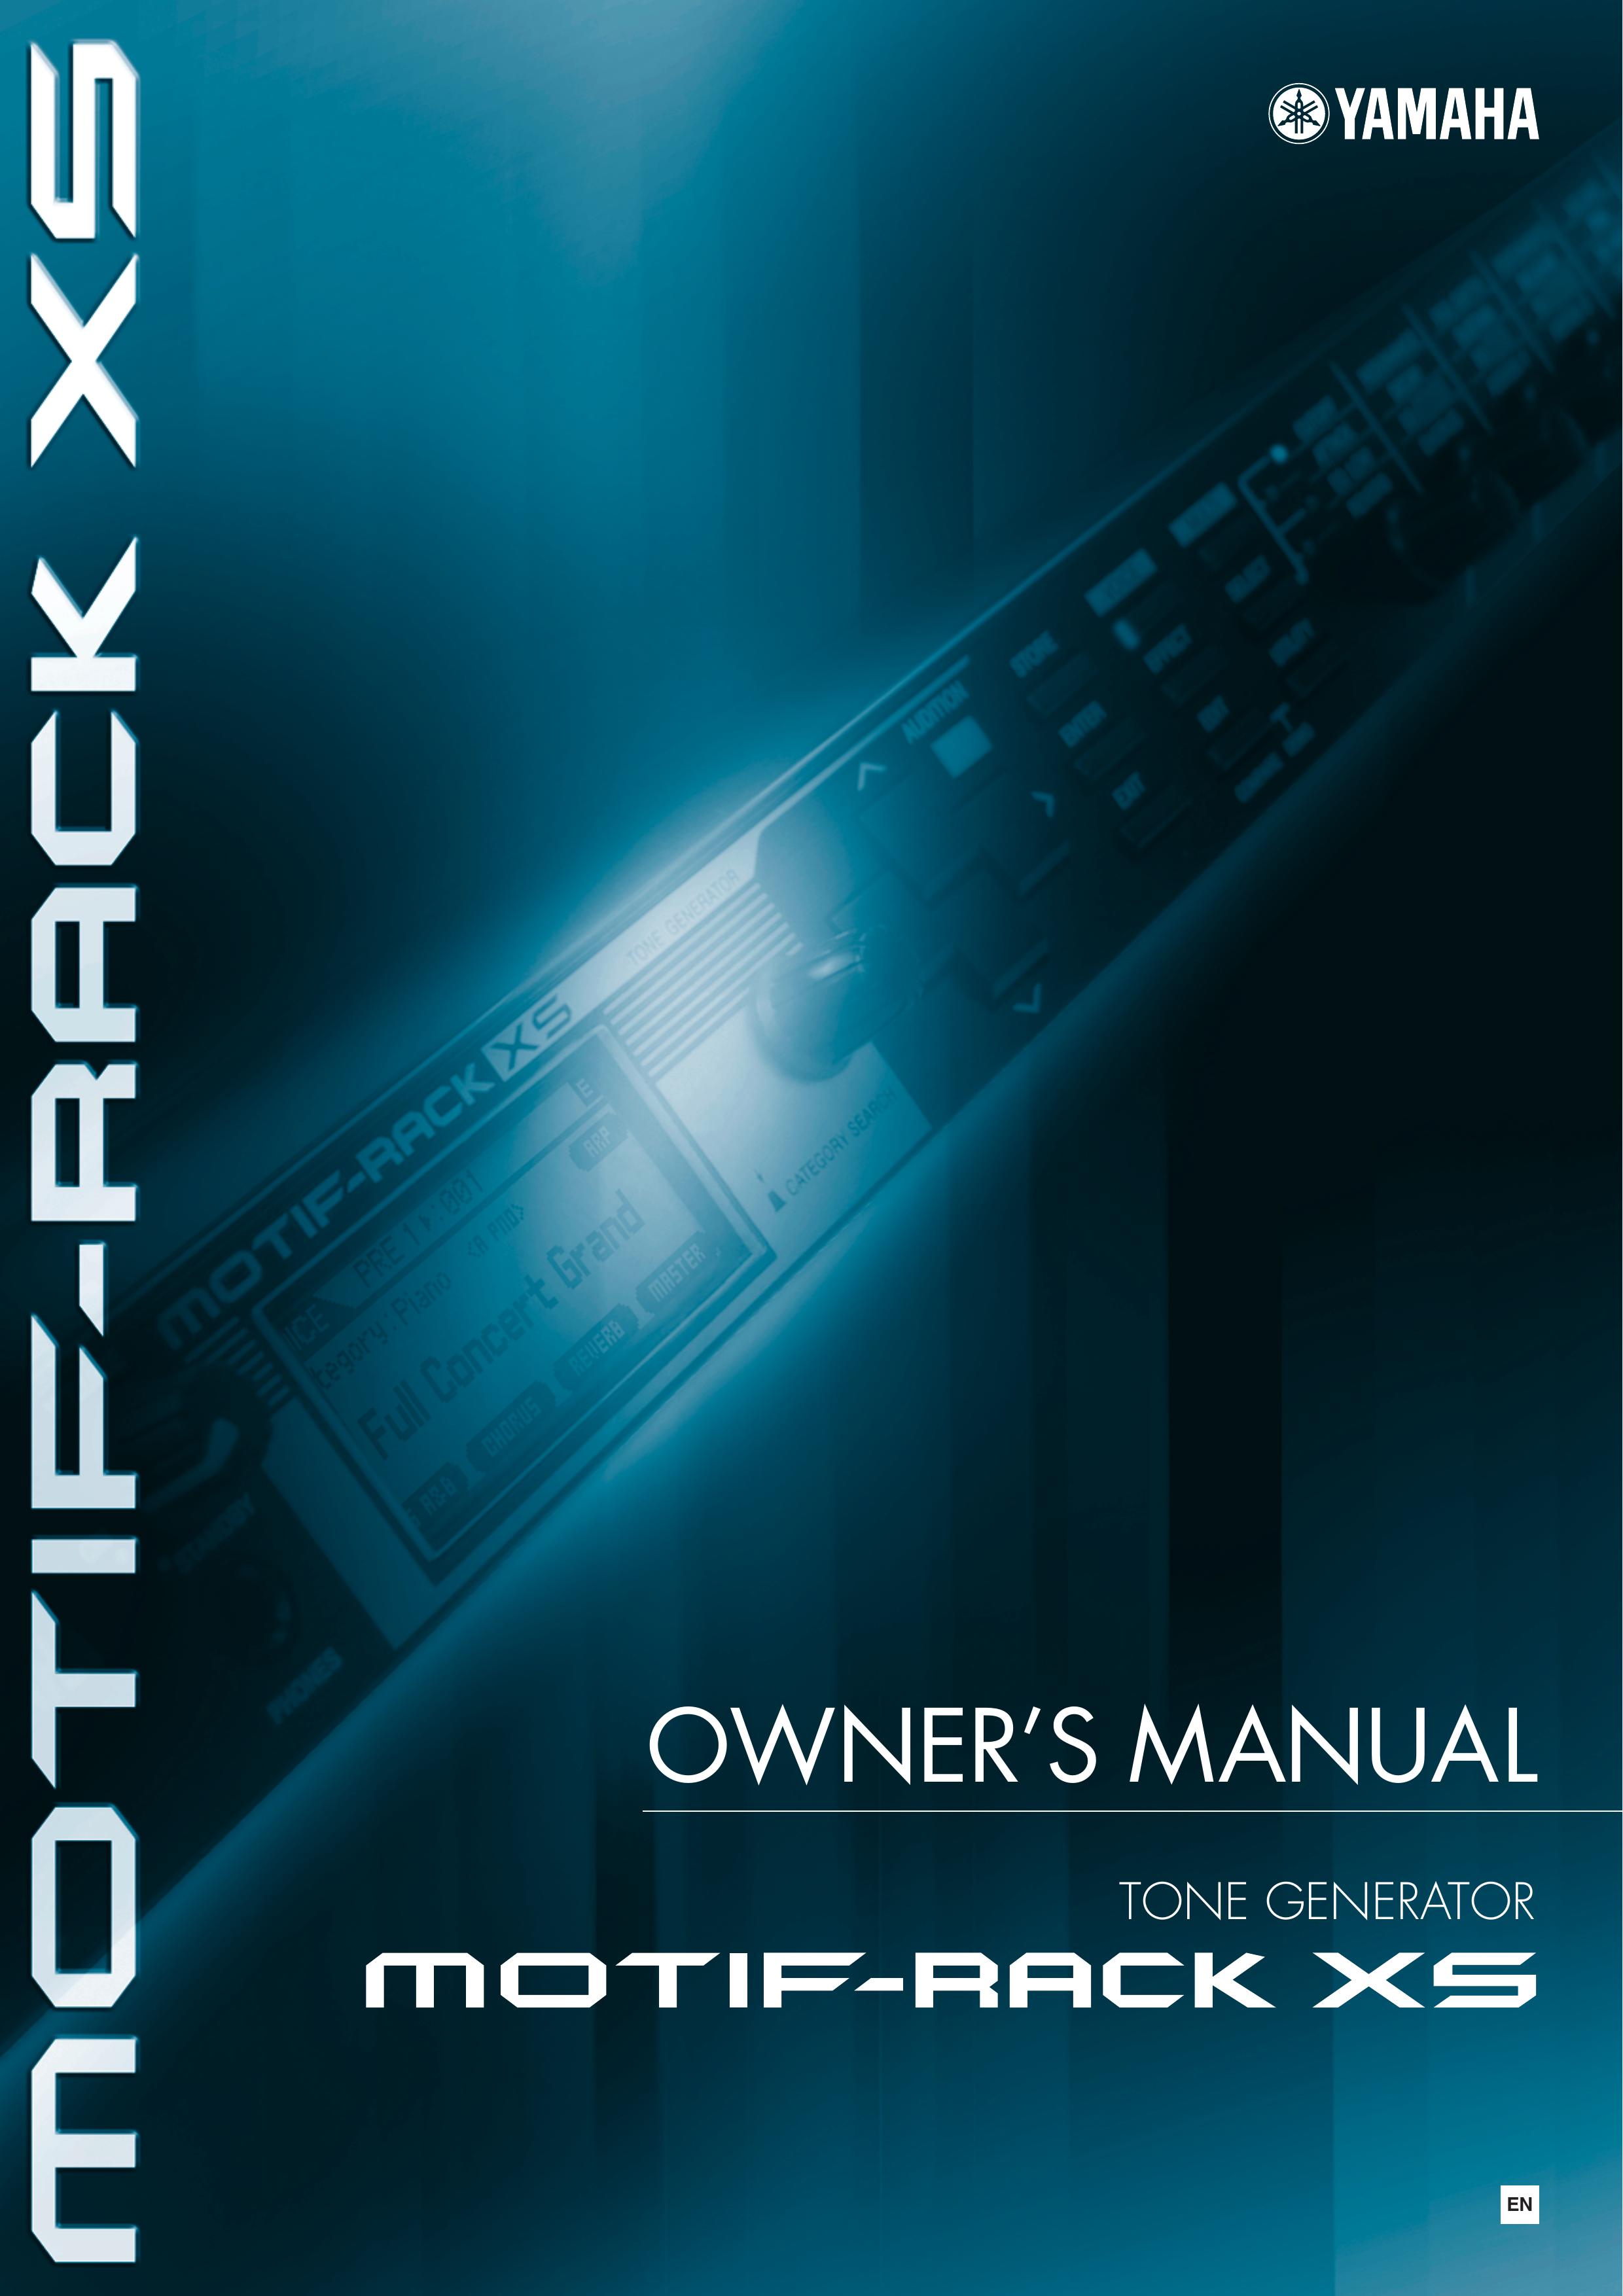 Yamaha MOTIF-RACK XS Portable Generator User Manual